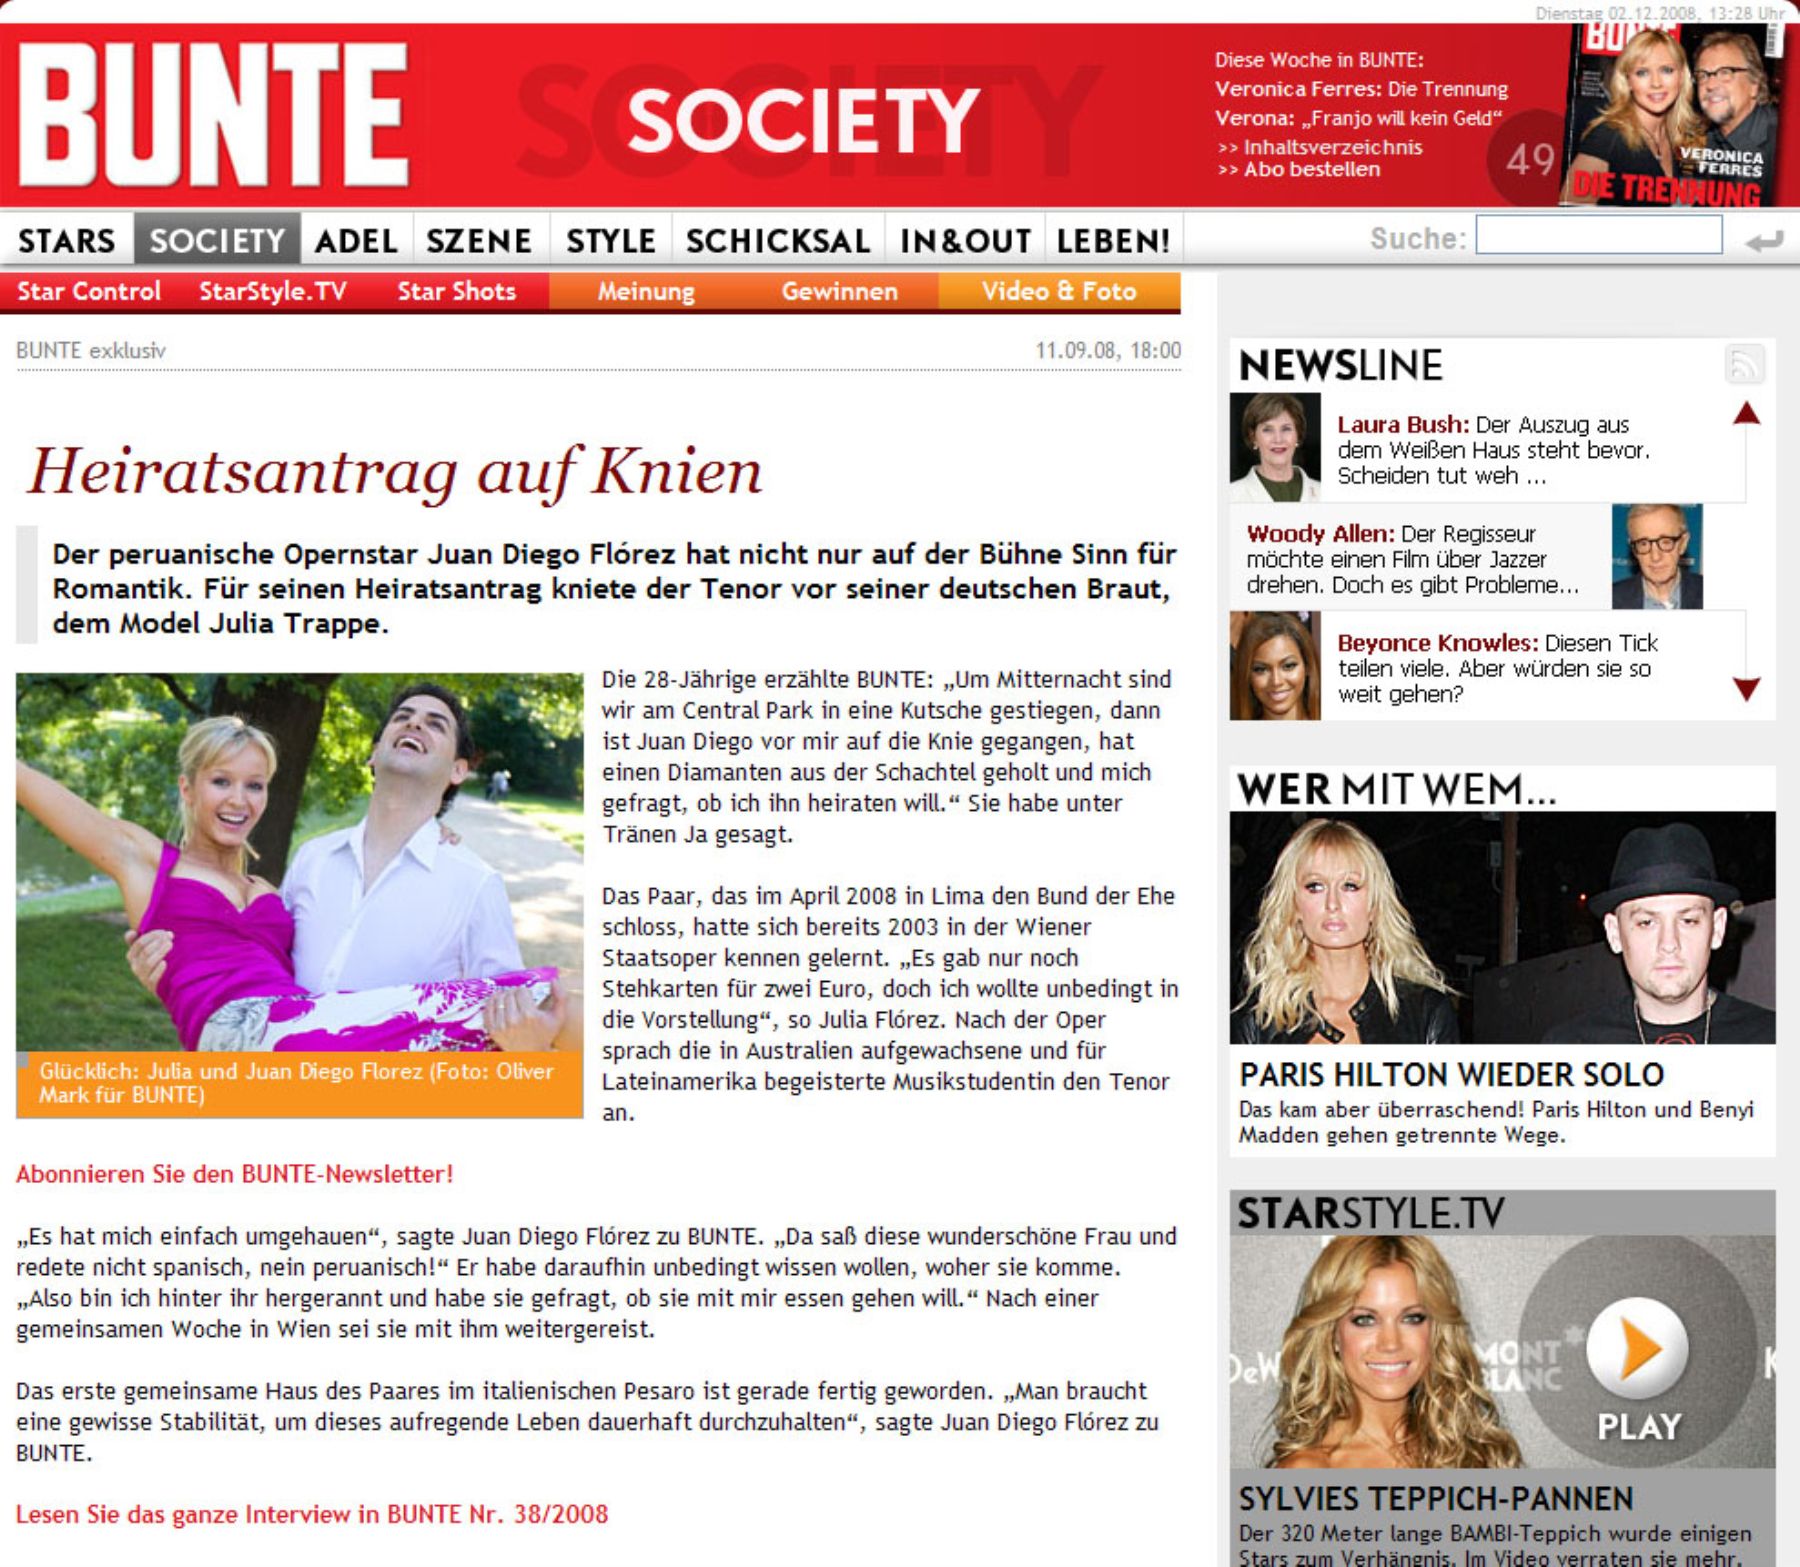 German magazine BUNTE